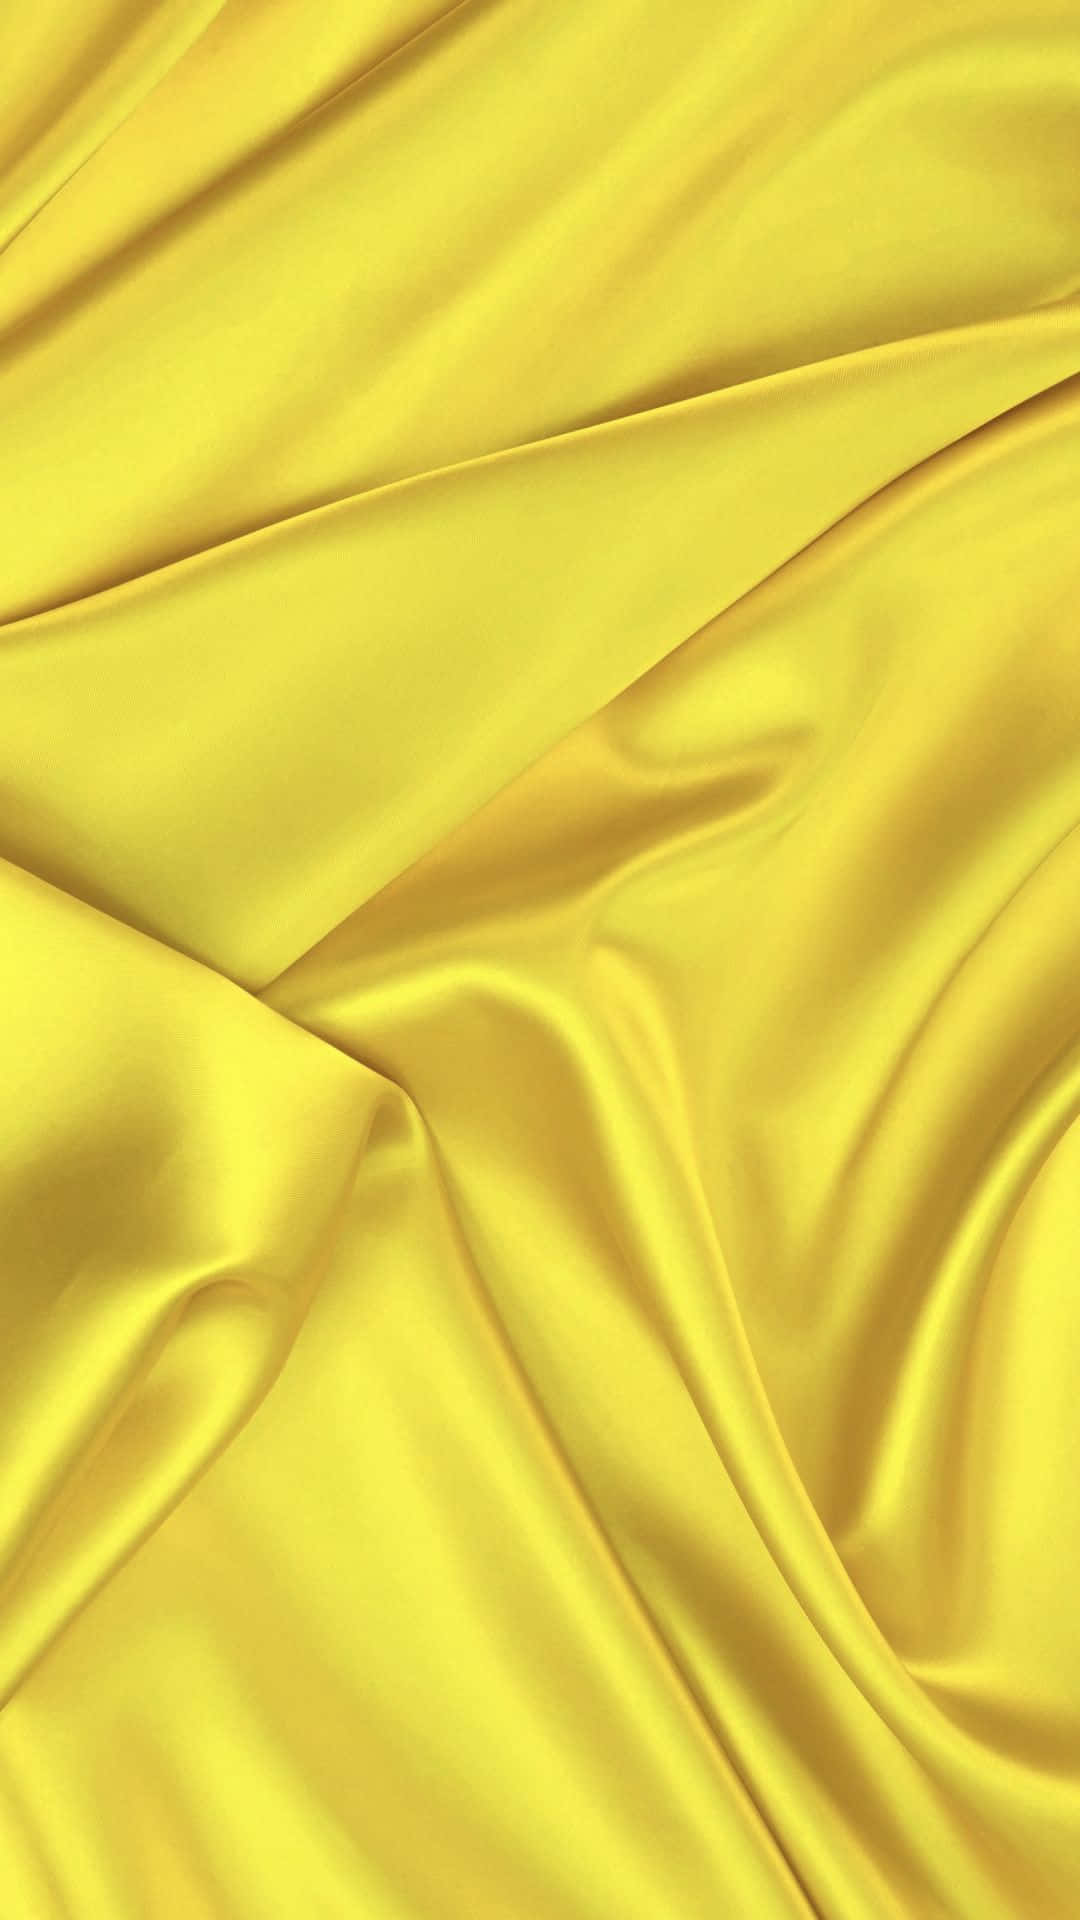 Yellow Satin Fabric Background Wallpaper